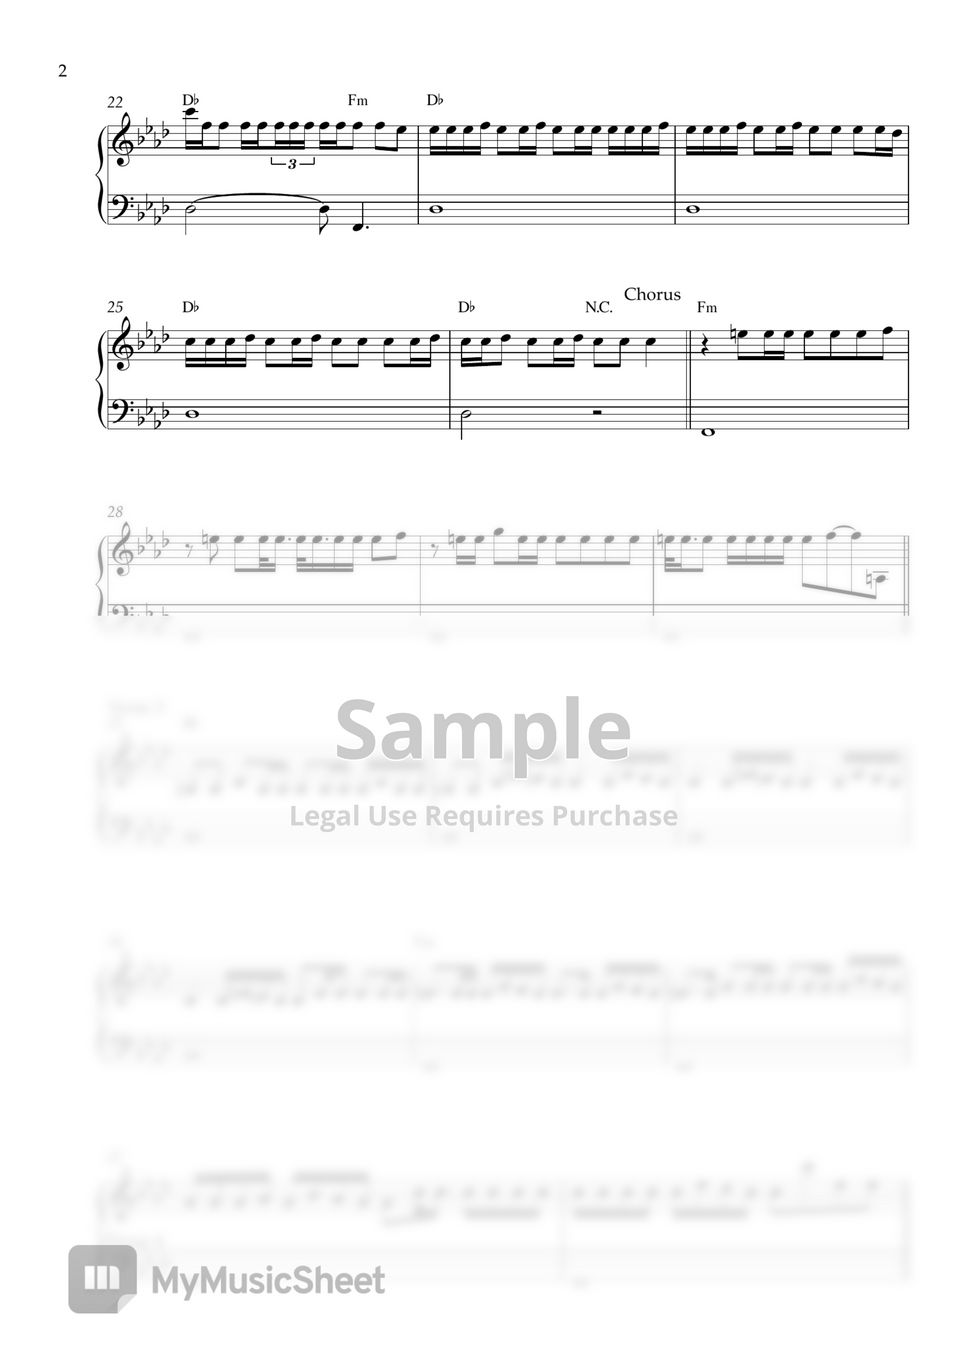 BTS j-hope - Arson (EASY Piano Sheet) by Pianella Piano